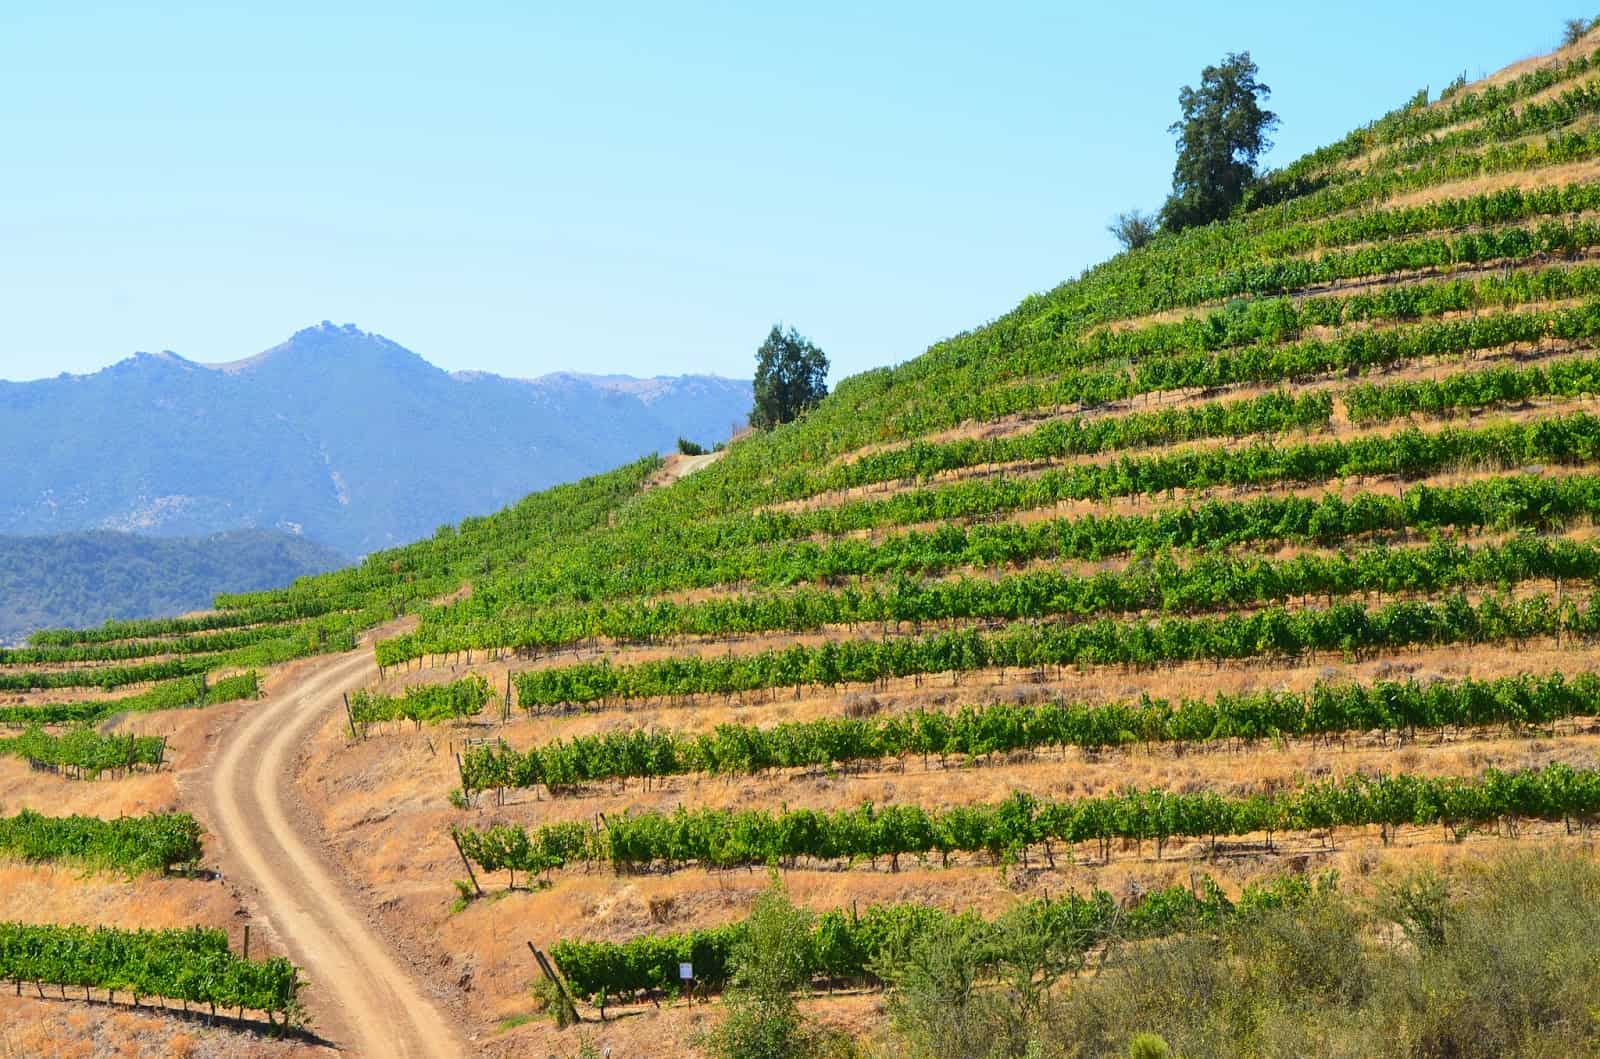 A path through the vineyard at Viña Santa Cruz in Colchagua Valley, Chile